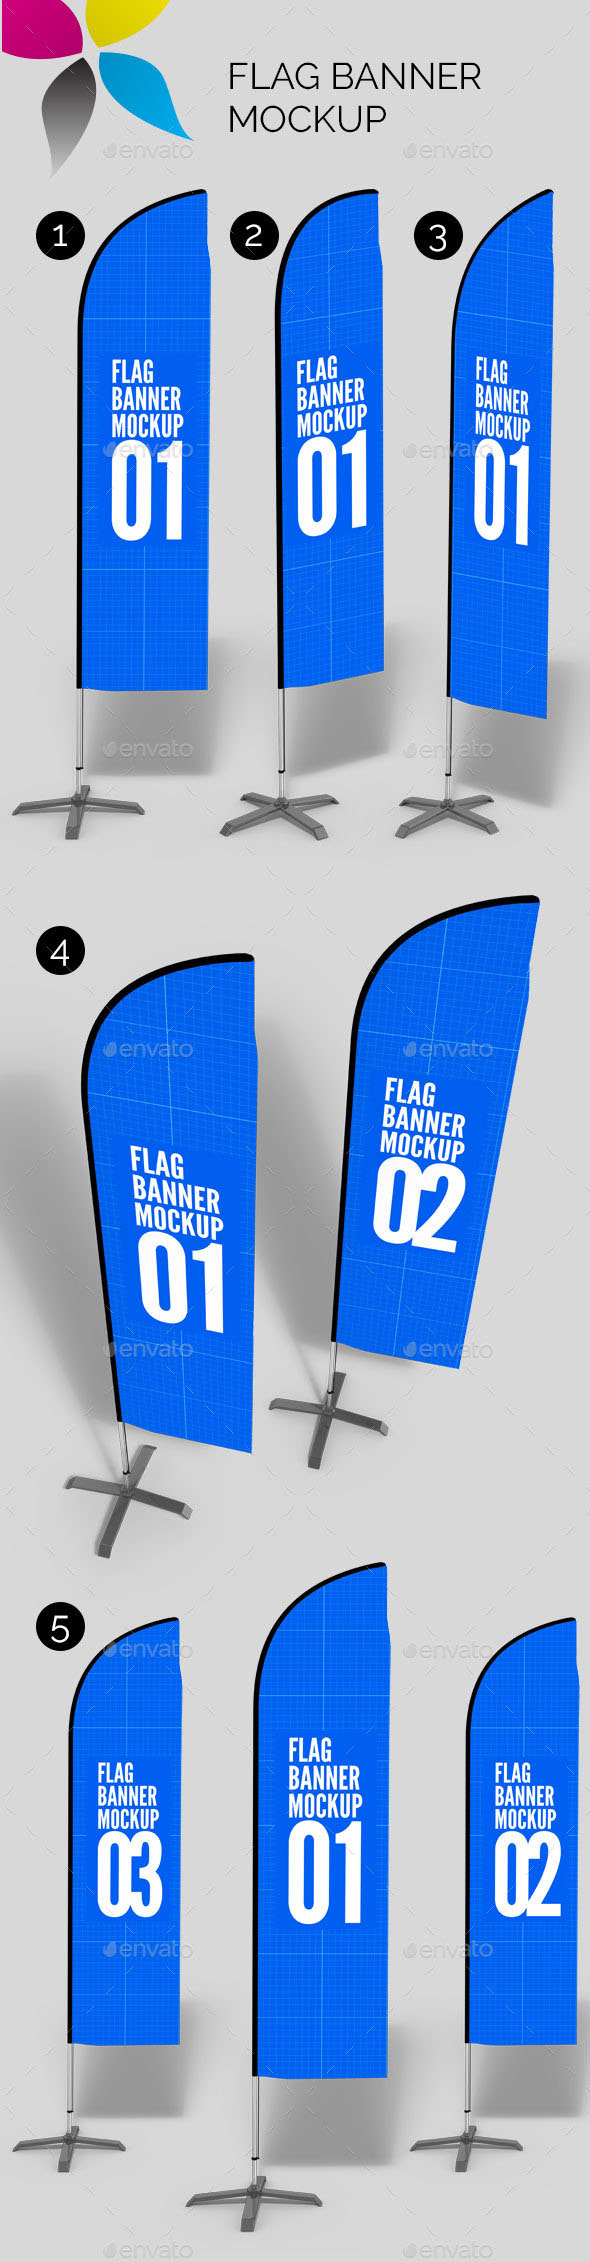 Premium Flag Banner Mockup